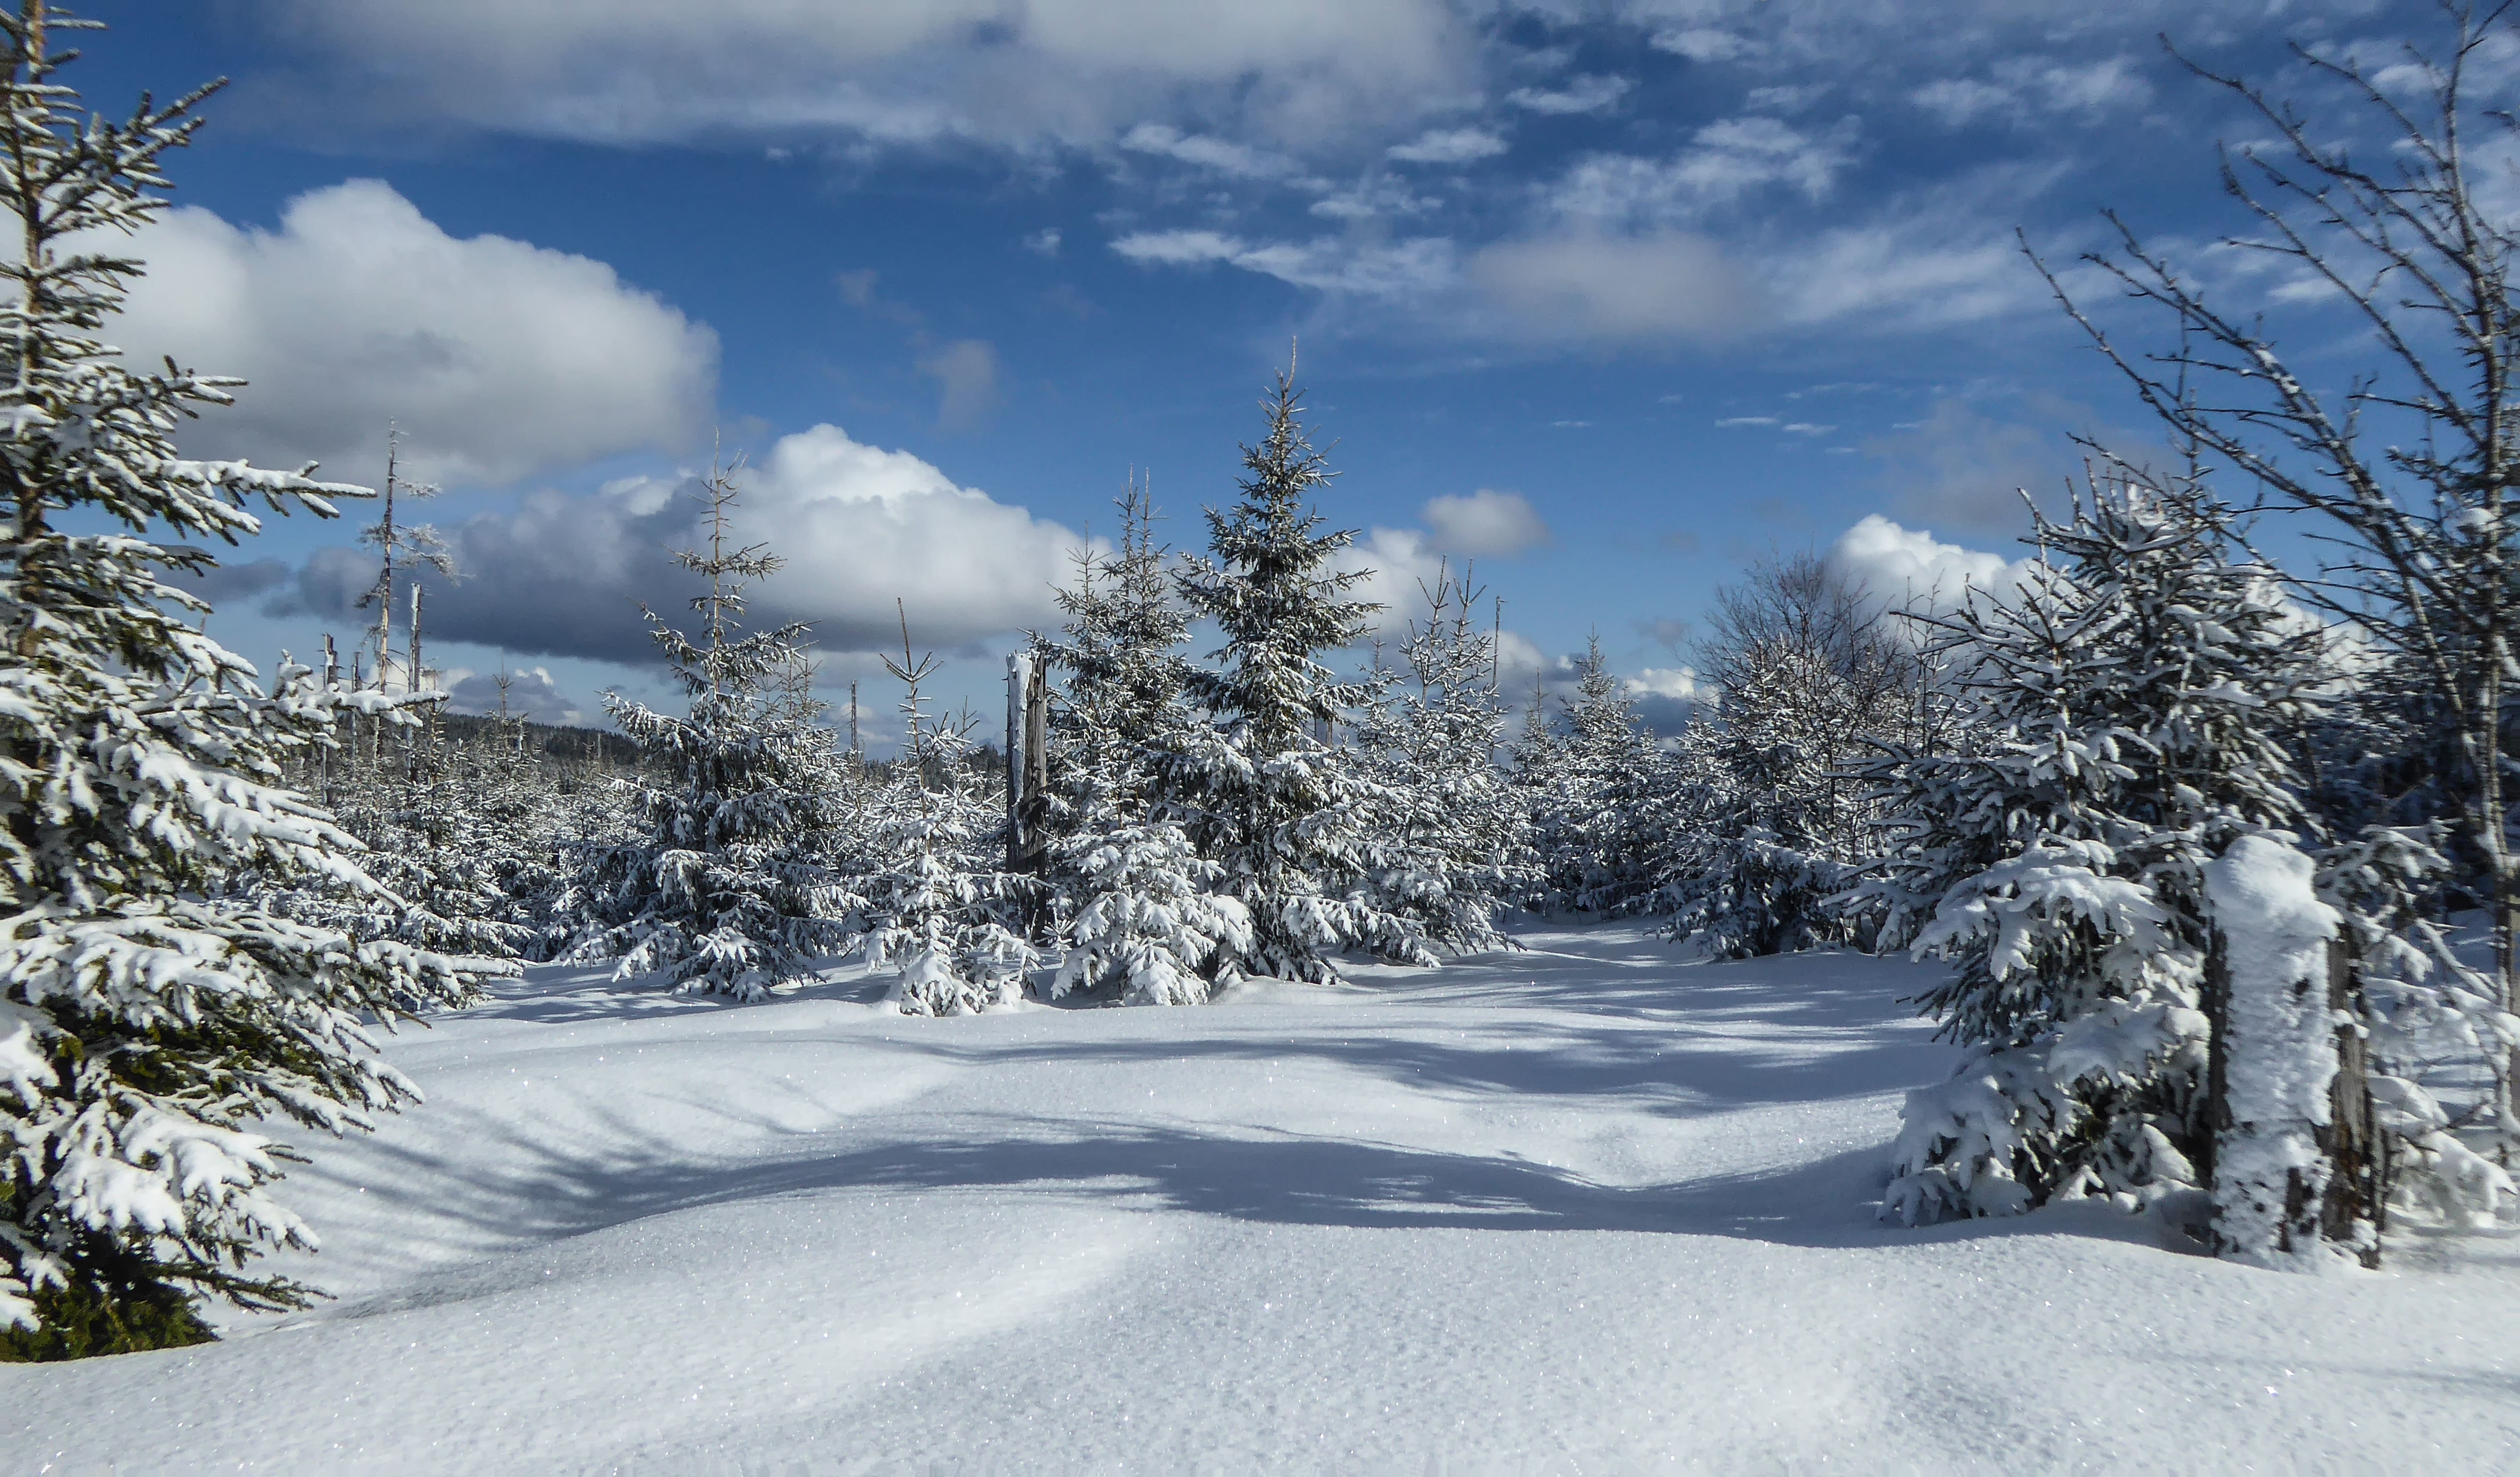 Вид зимы. Зимний лес. Зимняя природа. Панорама зимнего леса. Зима пейзаж.